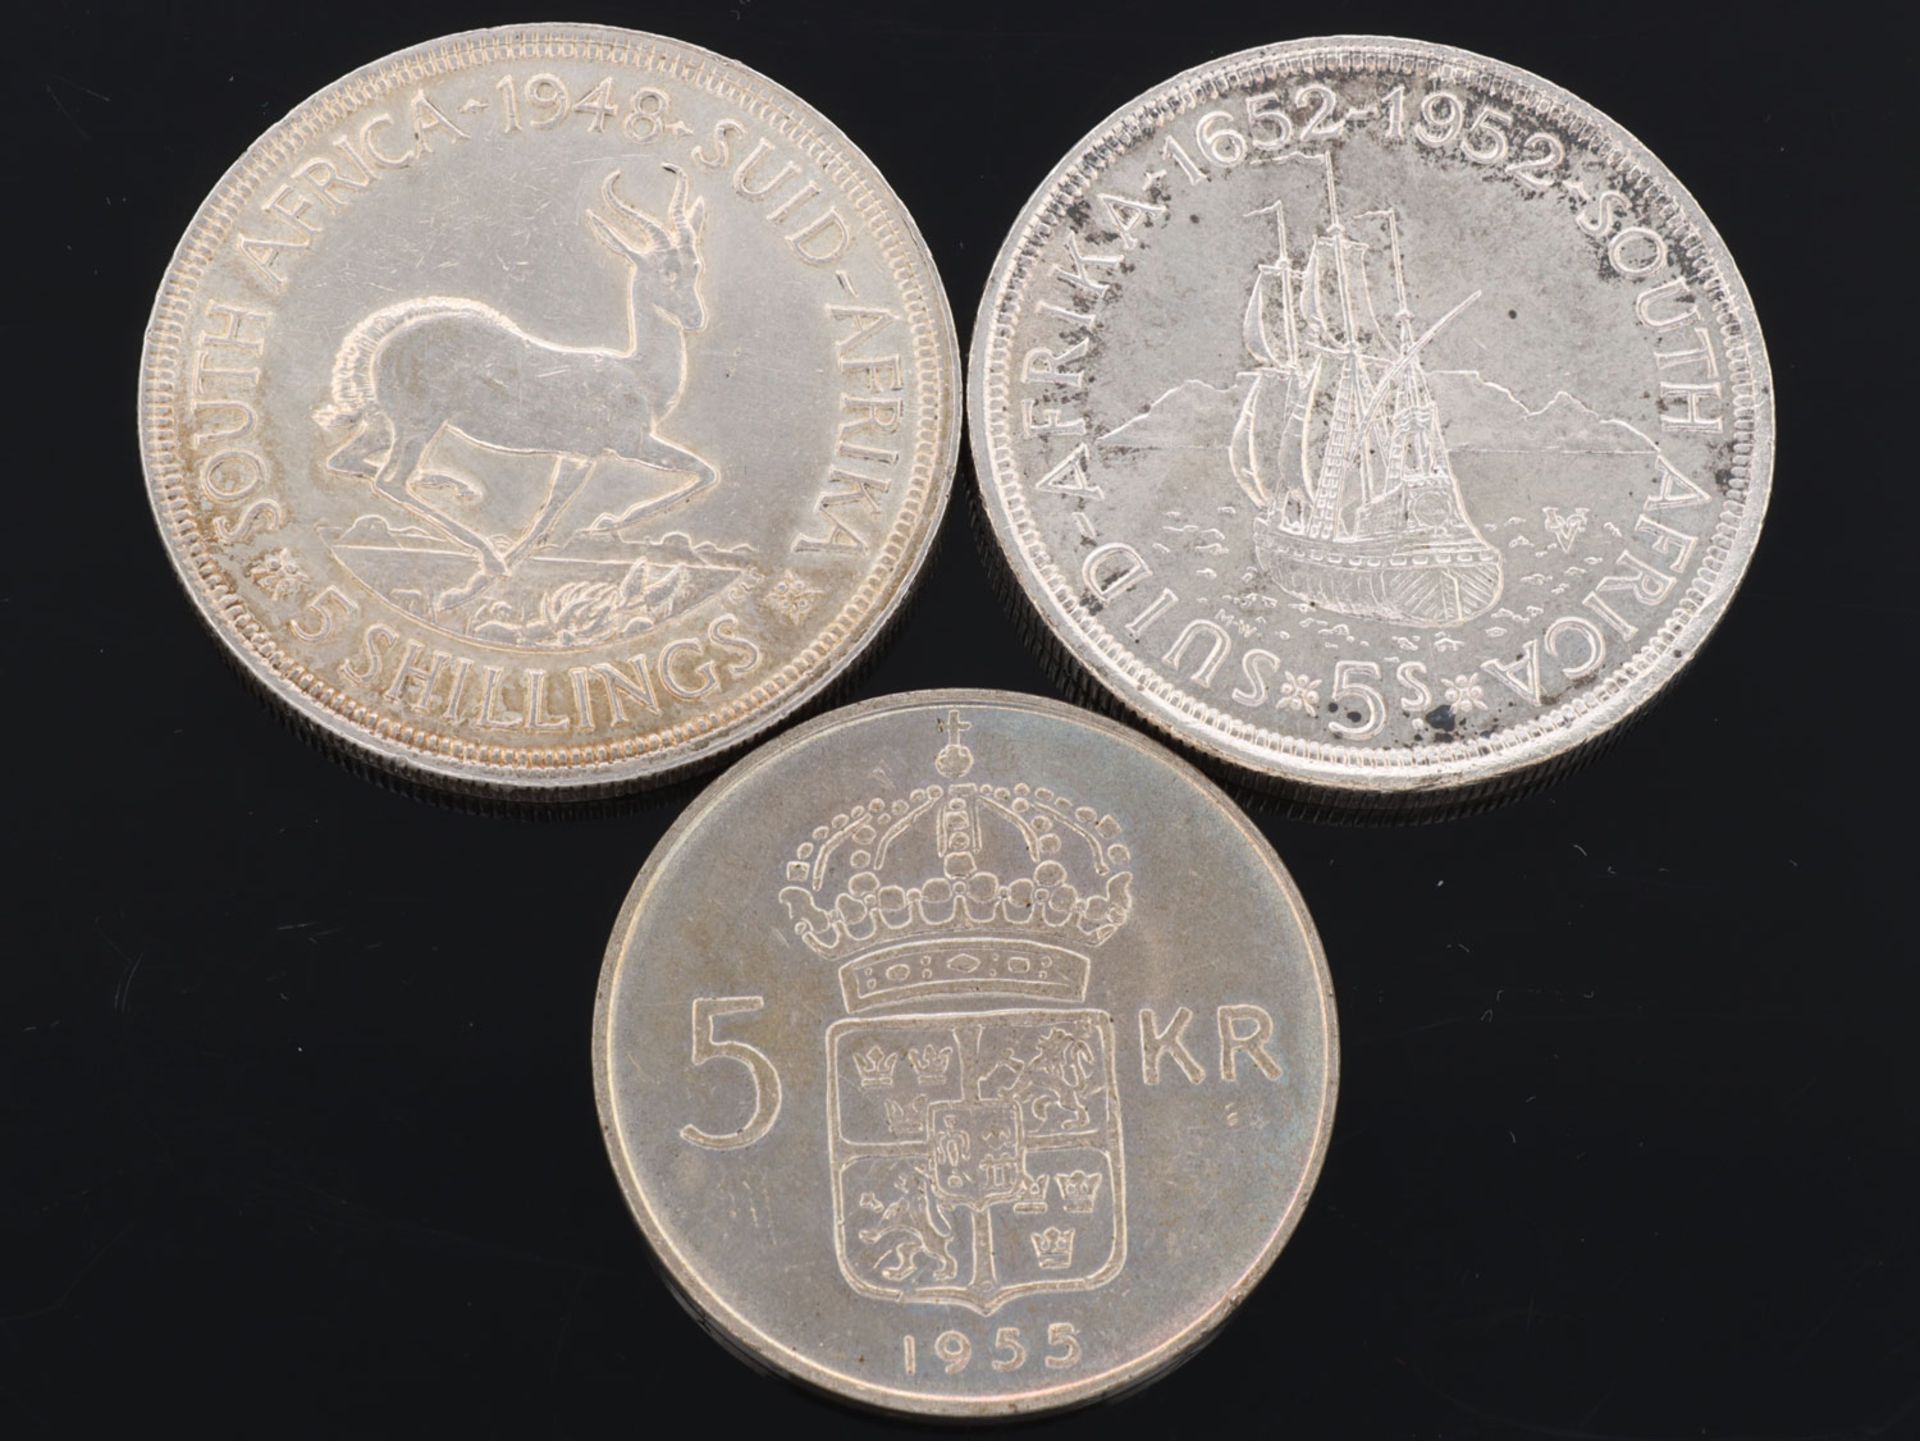 Silbermünzen - Image 3 of 6